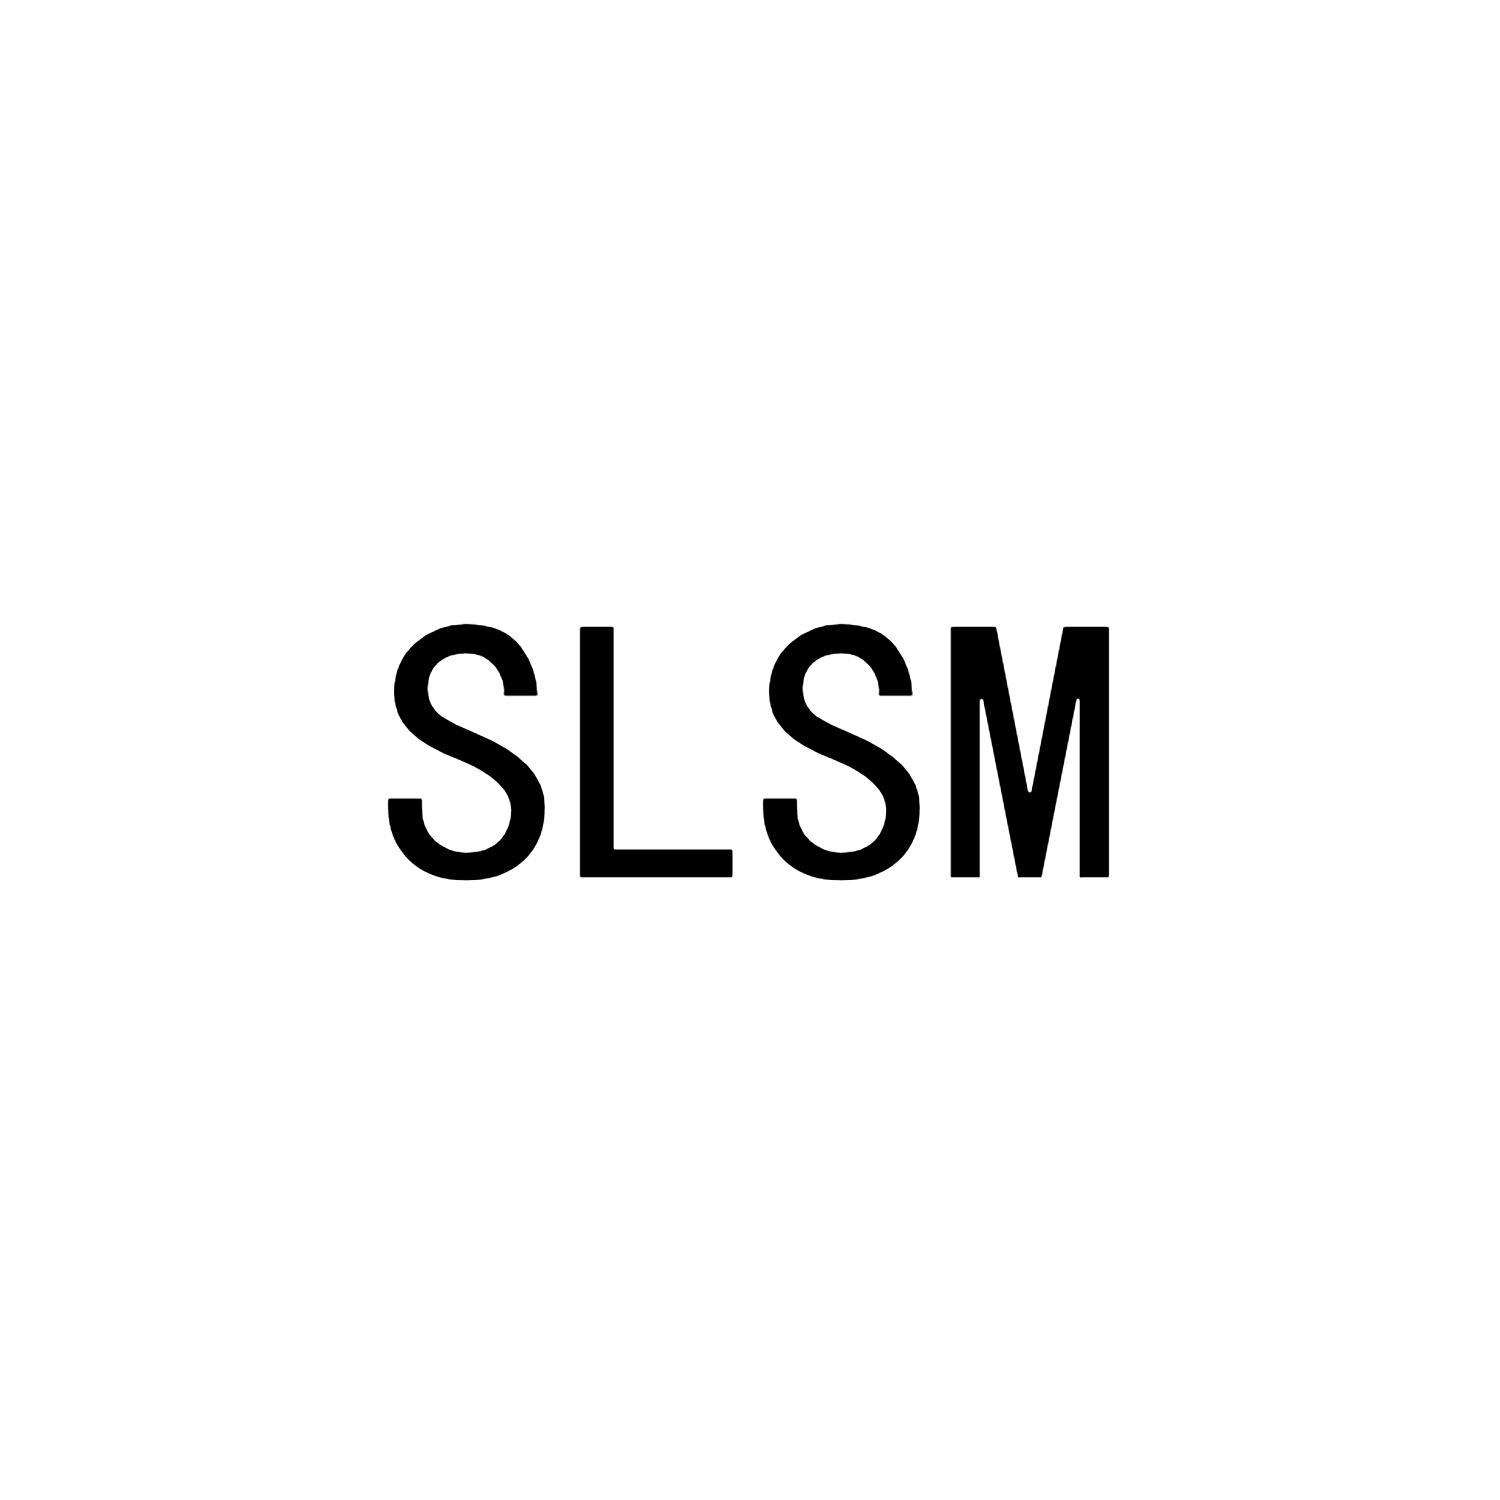 SLSM